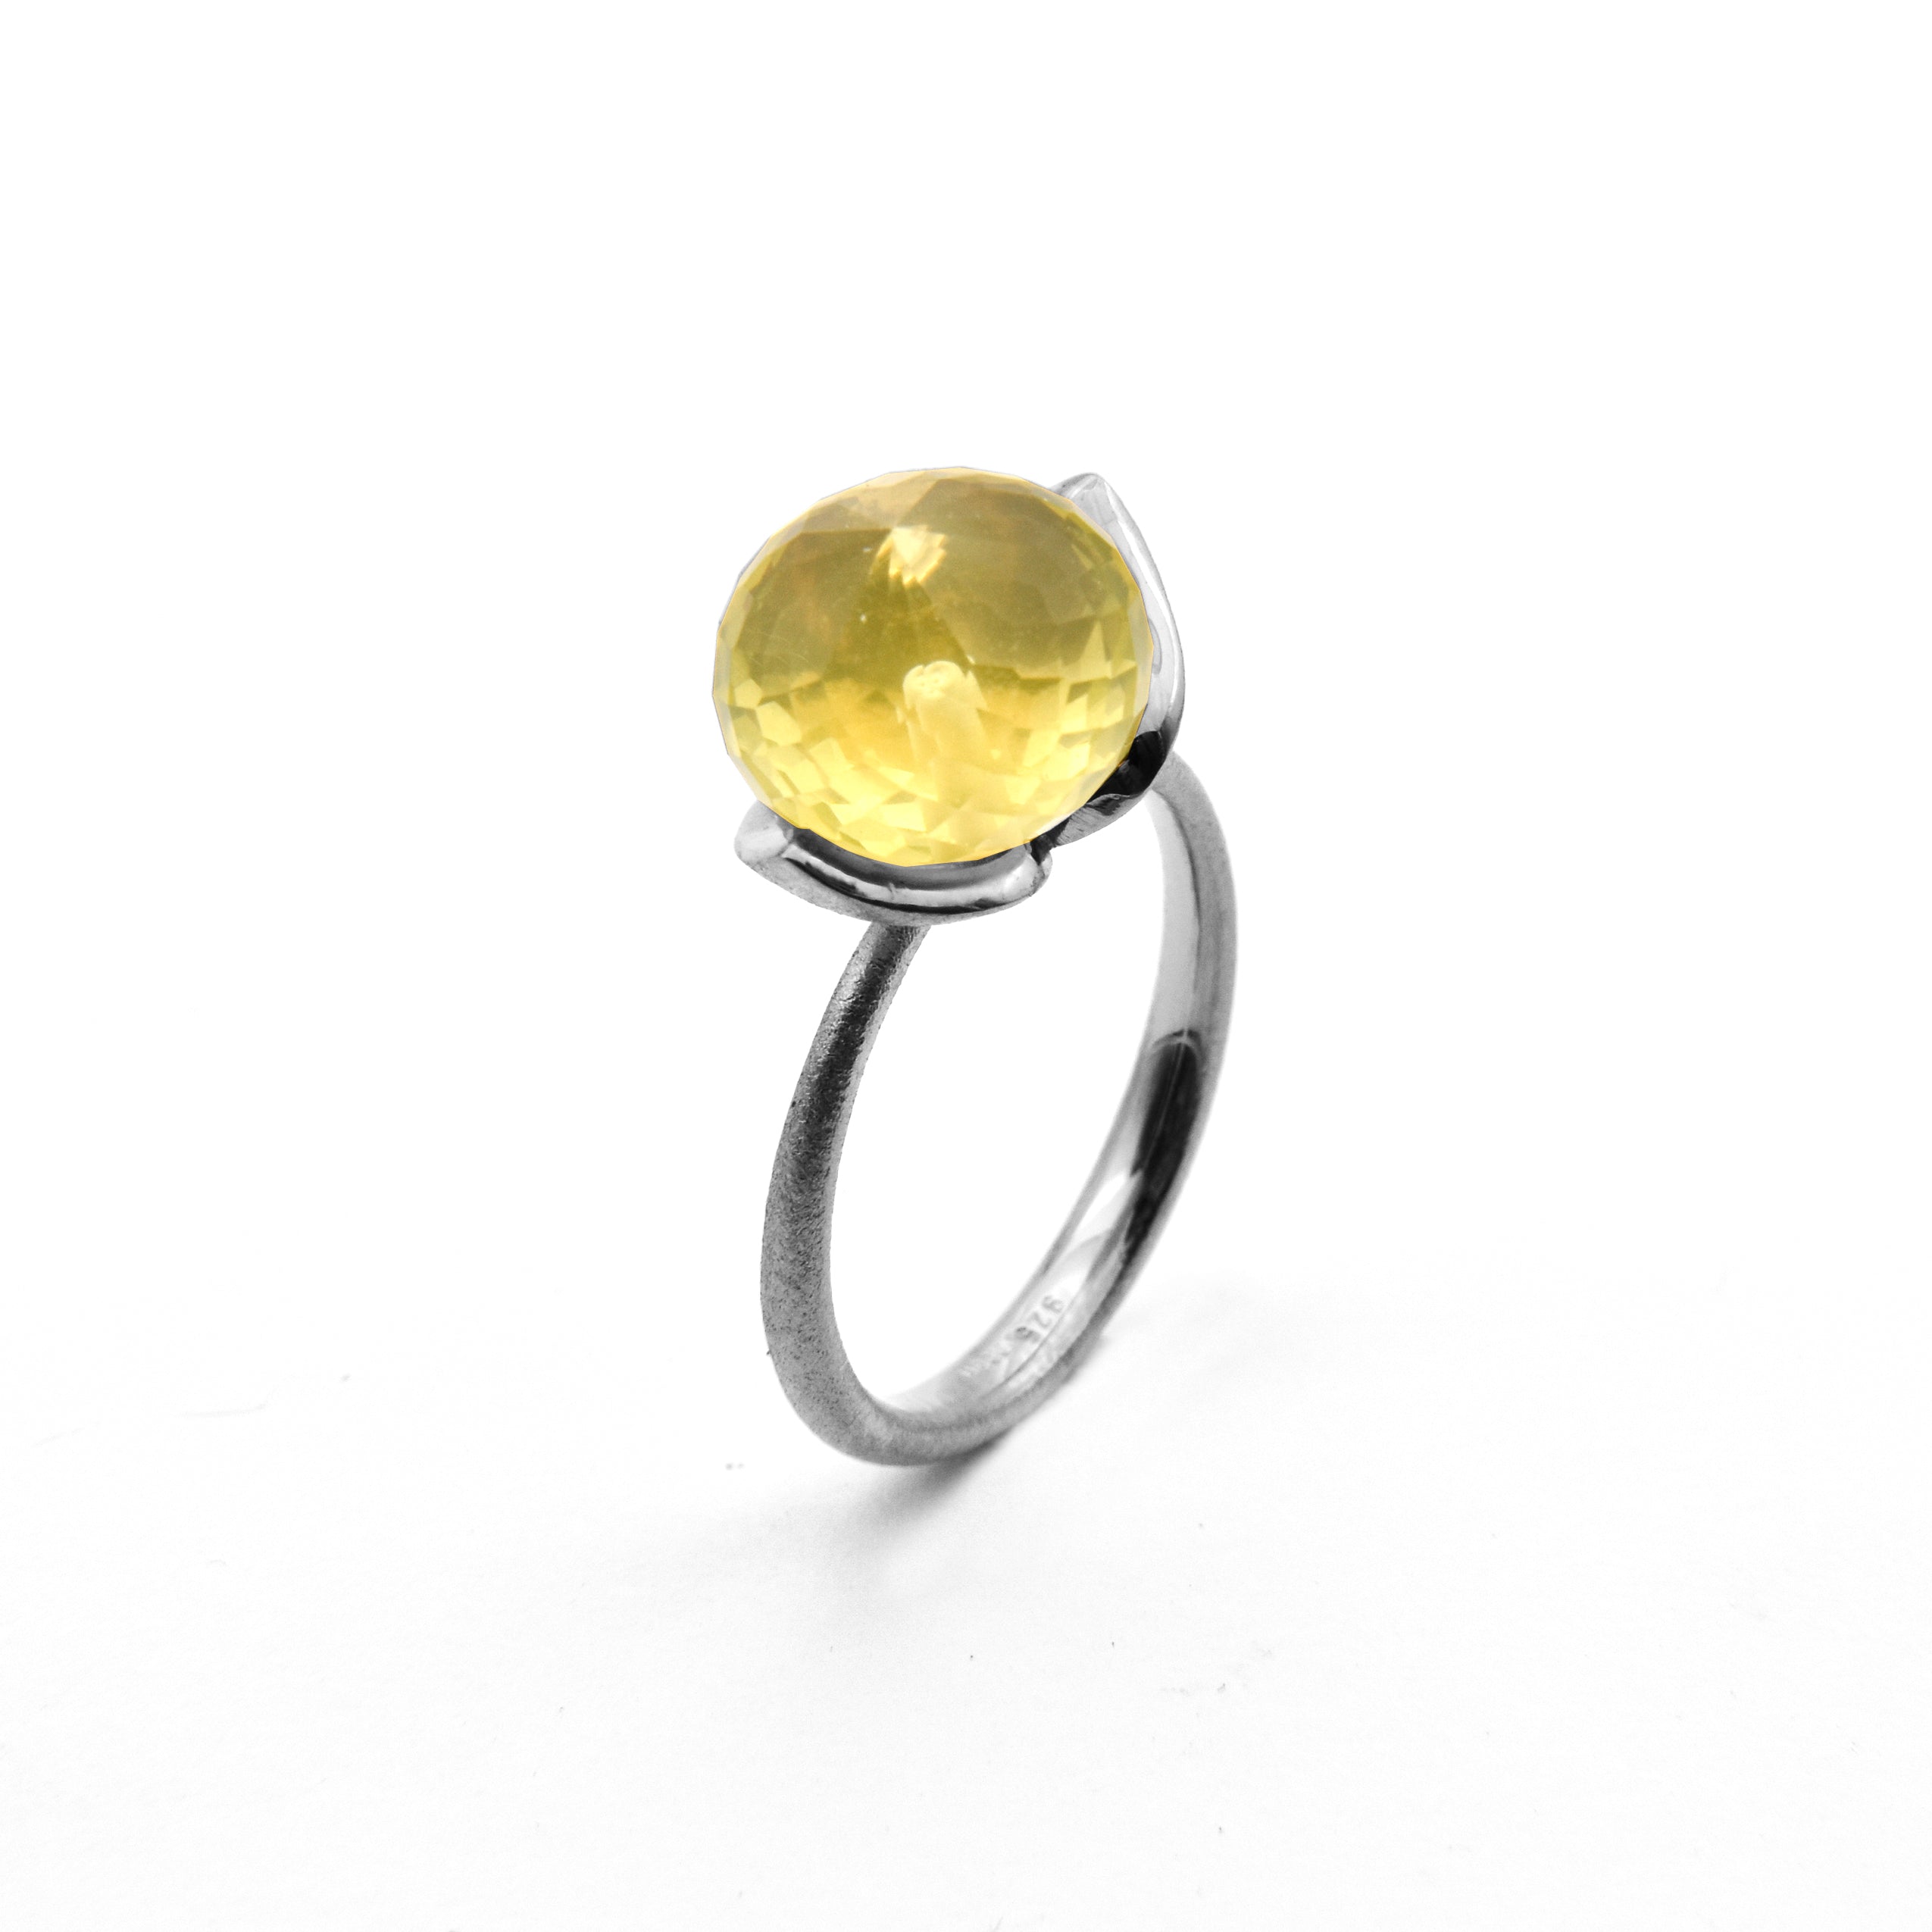 Dolce ring "medium" with lemon quartz 925/-